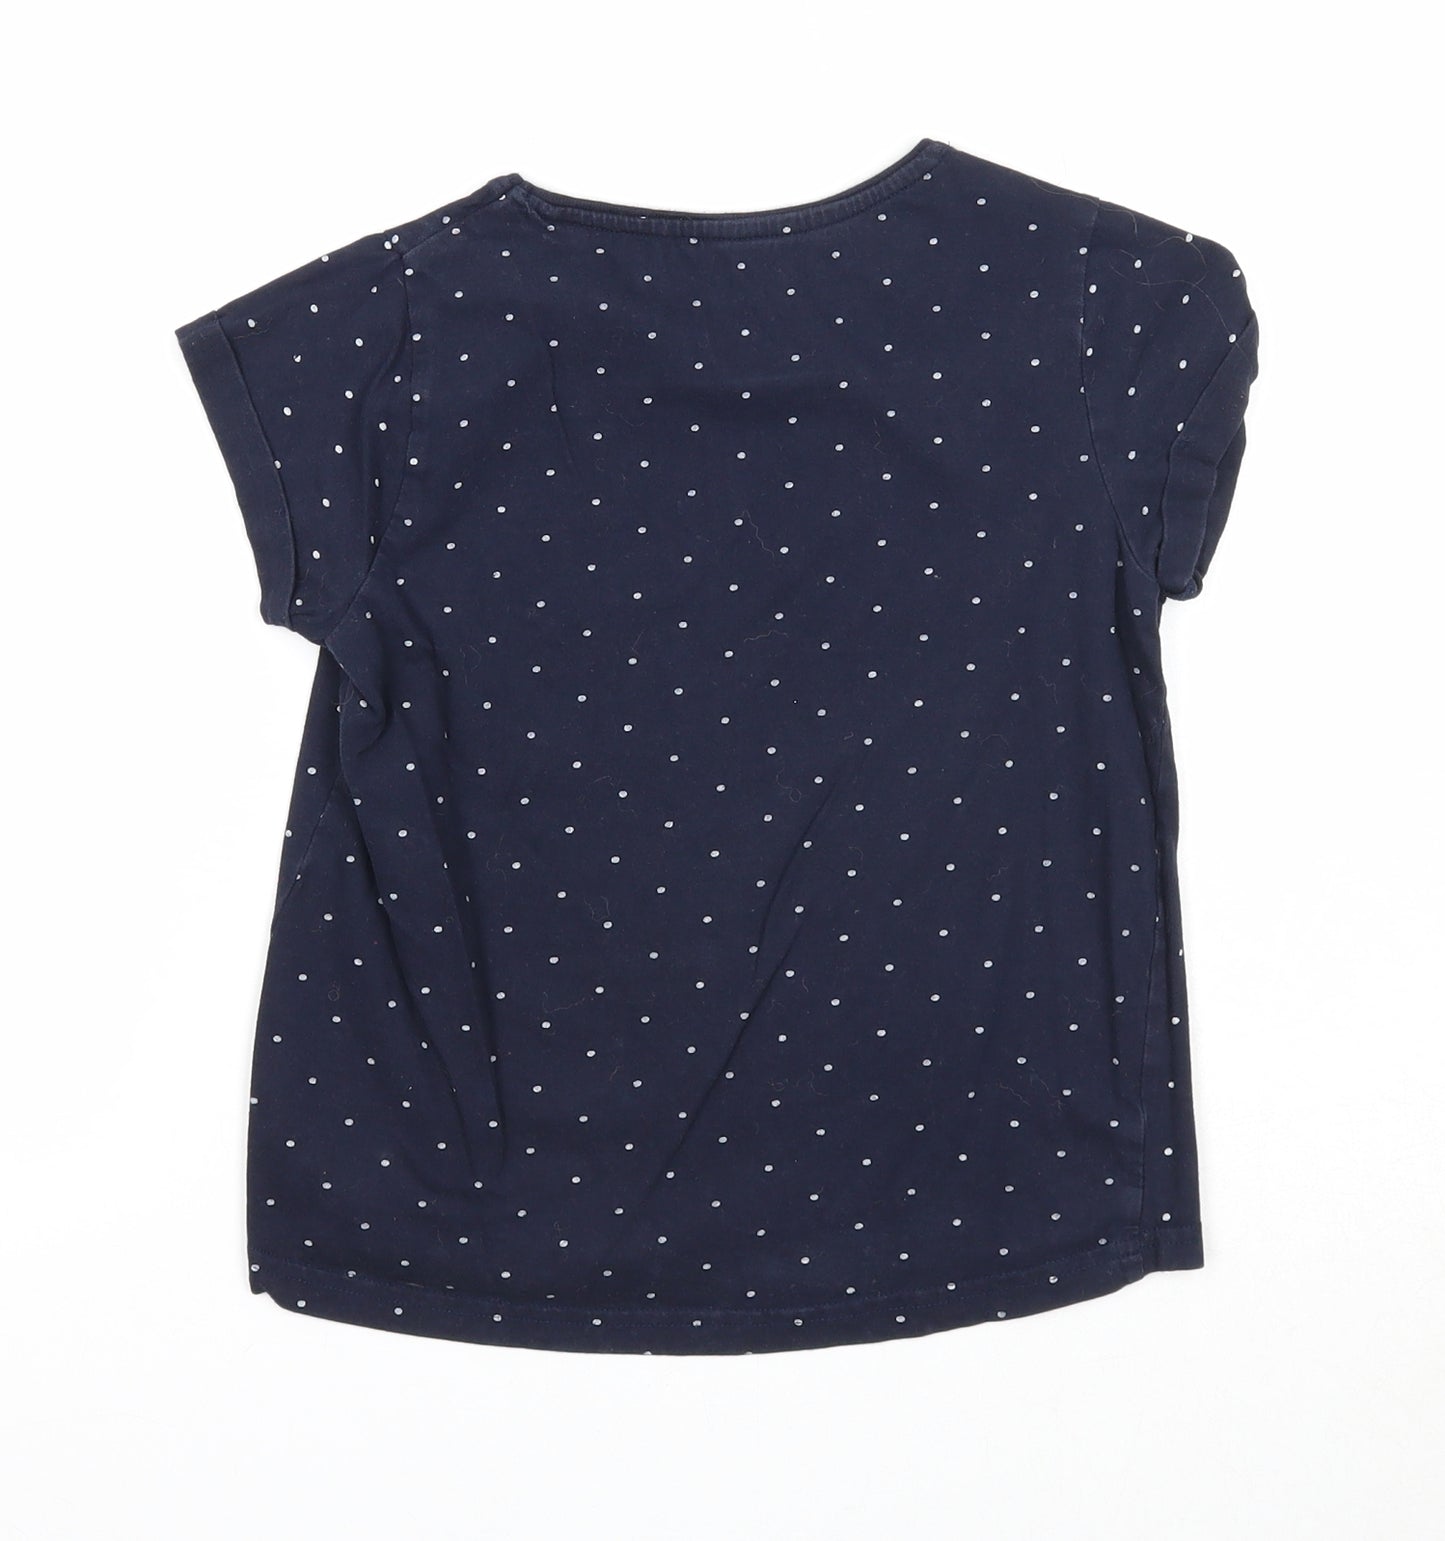 Primark Girls Blue Polka Dot Cotton Basic T-Shirt Size 9-10 Years Round Neck Pullover - Shimmer Sparkle Shine